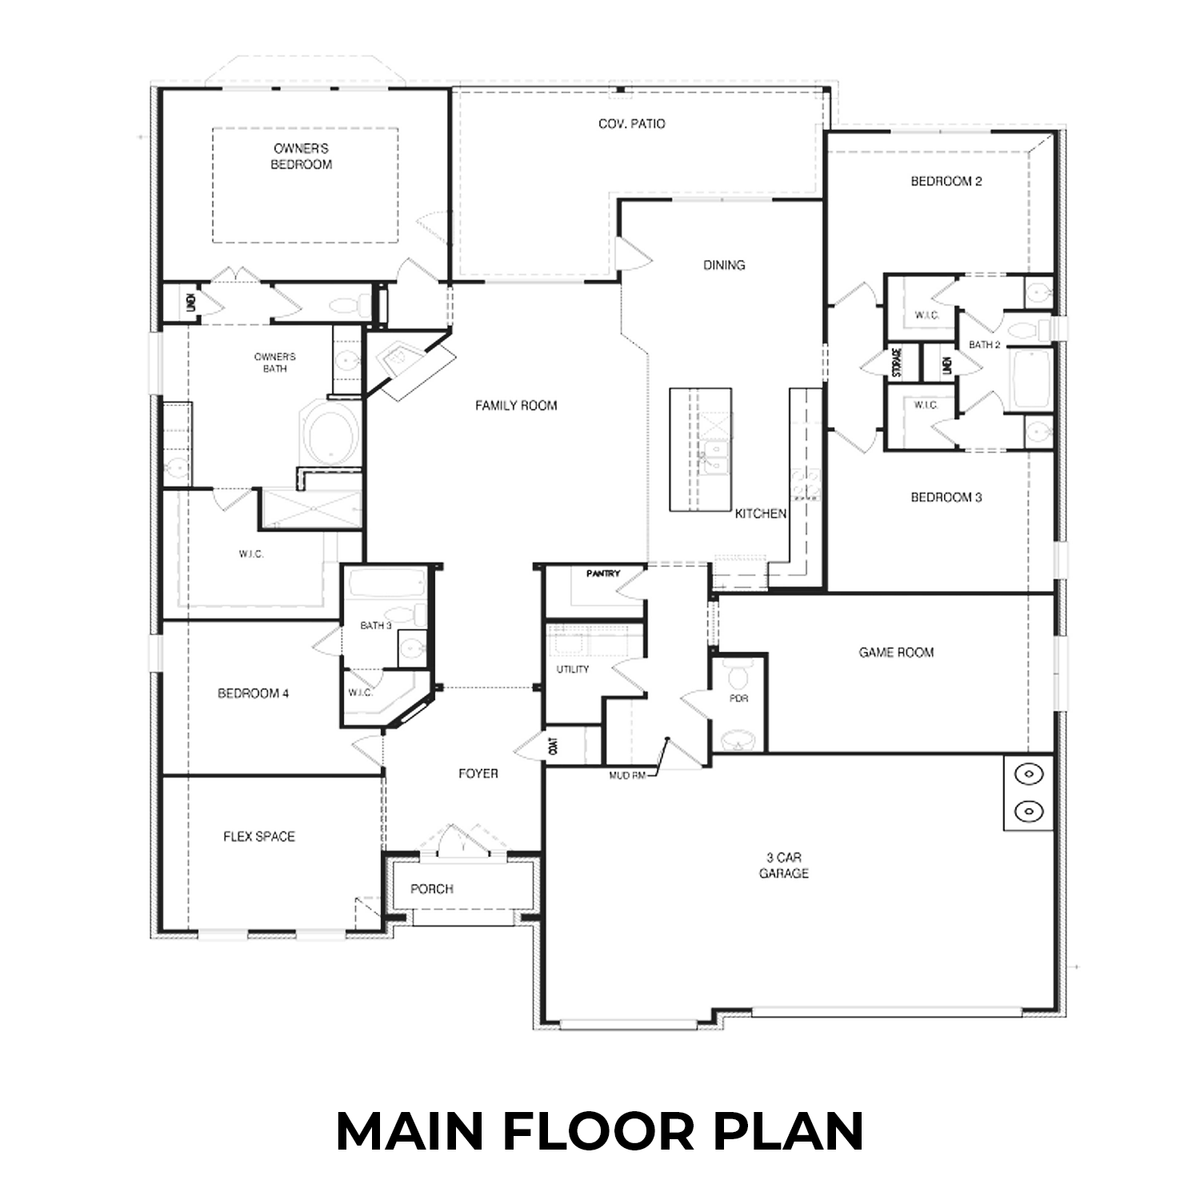 1 - The Garner B floor plan layout for 136 Mason Lane in Davidson Homes' The Reserve at Potranco Oaks community.